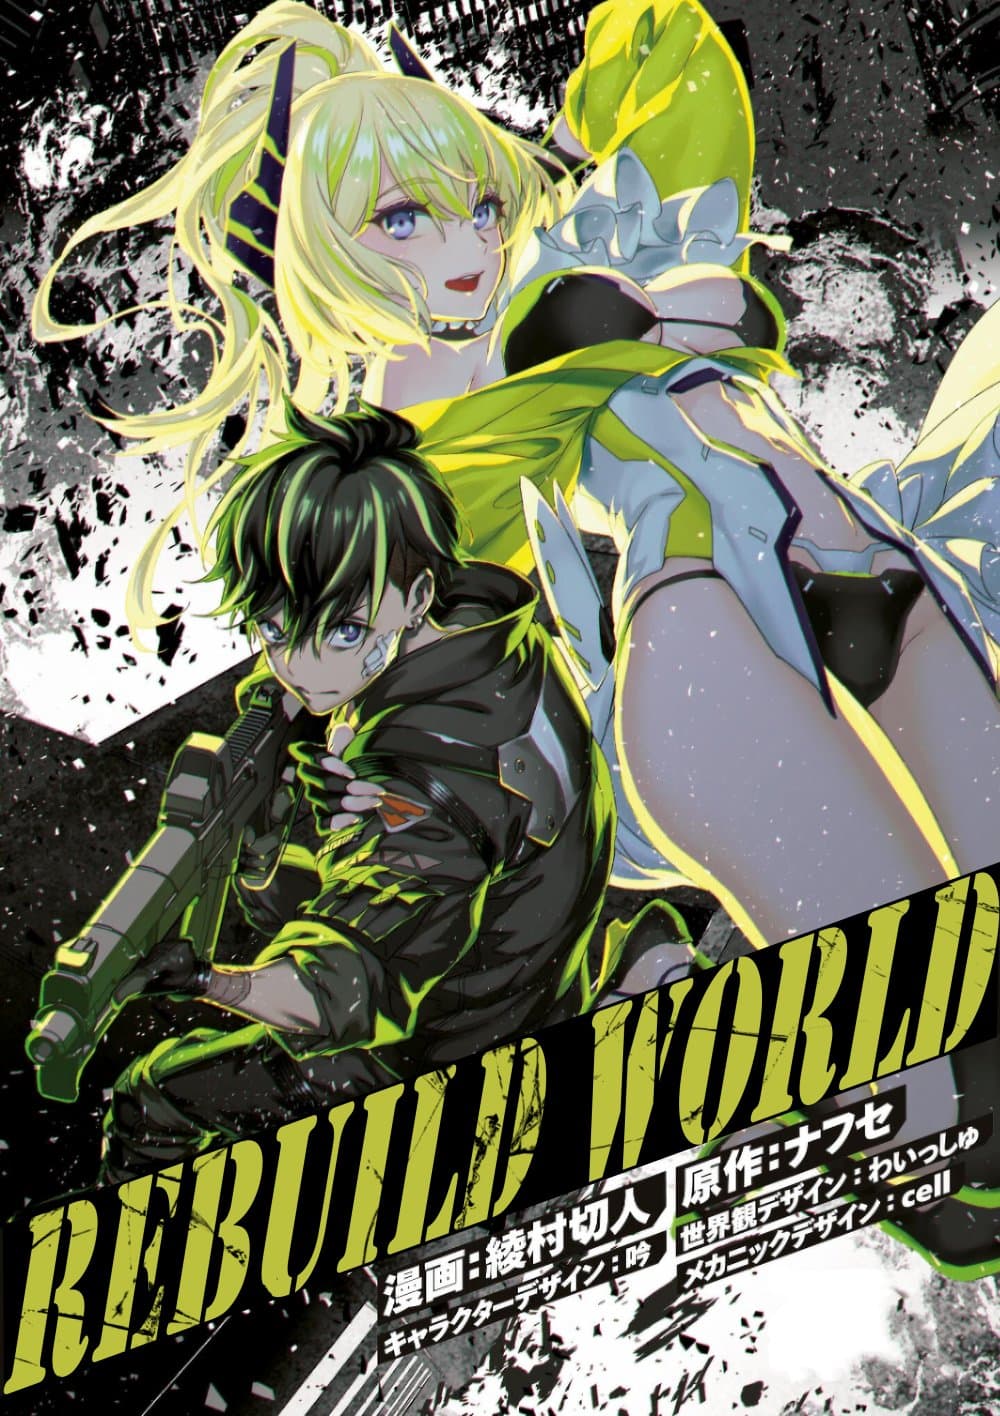 Rebuild World 23 (1)